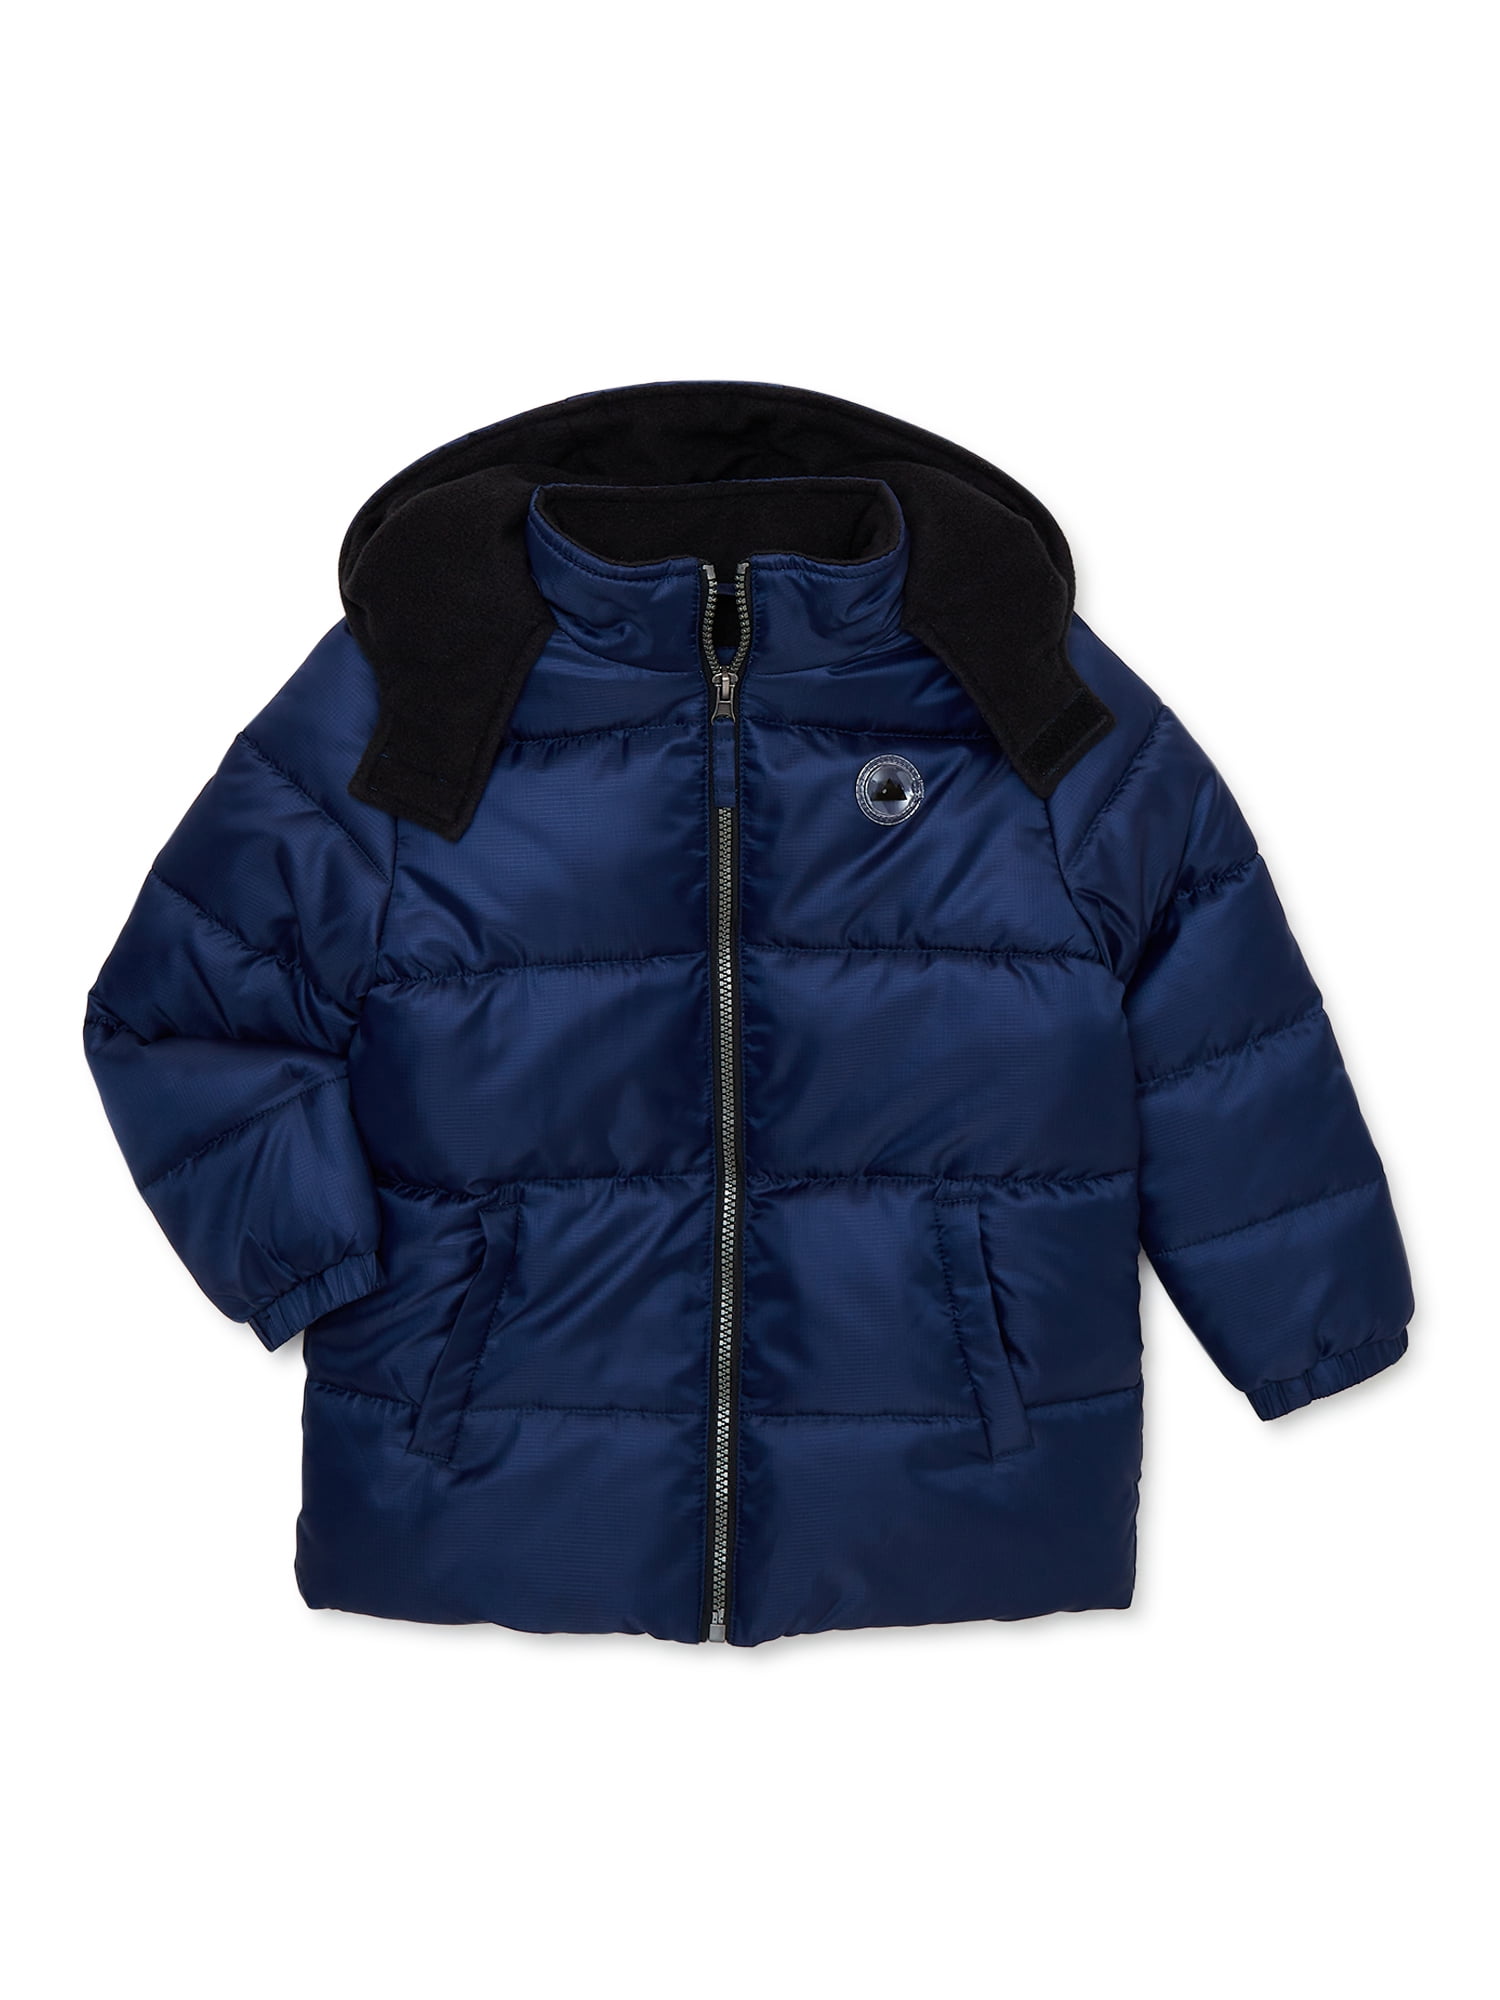 iXtreme Boys Solid Puffer Jacket, Sizes 4-18 - Walmart.com